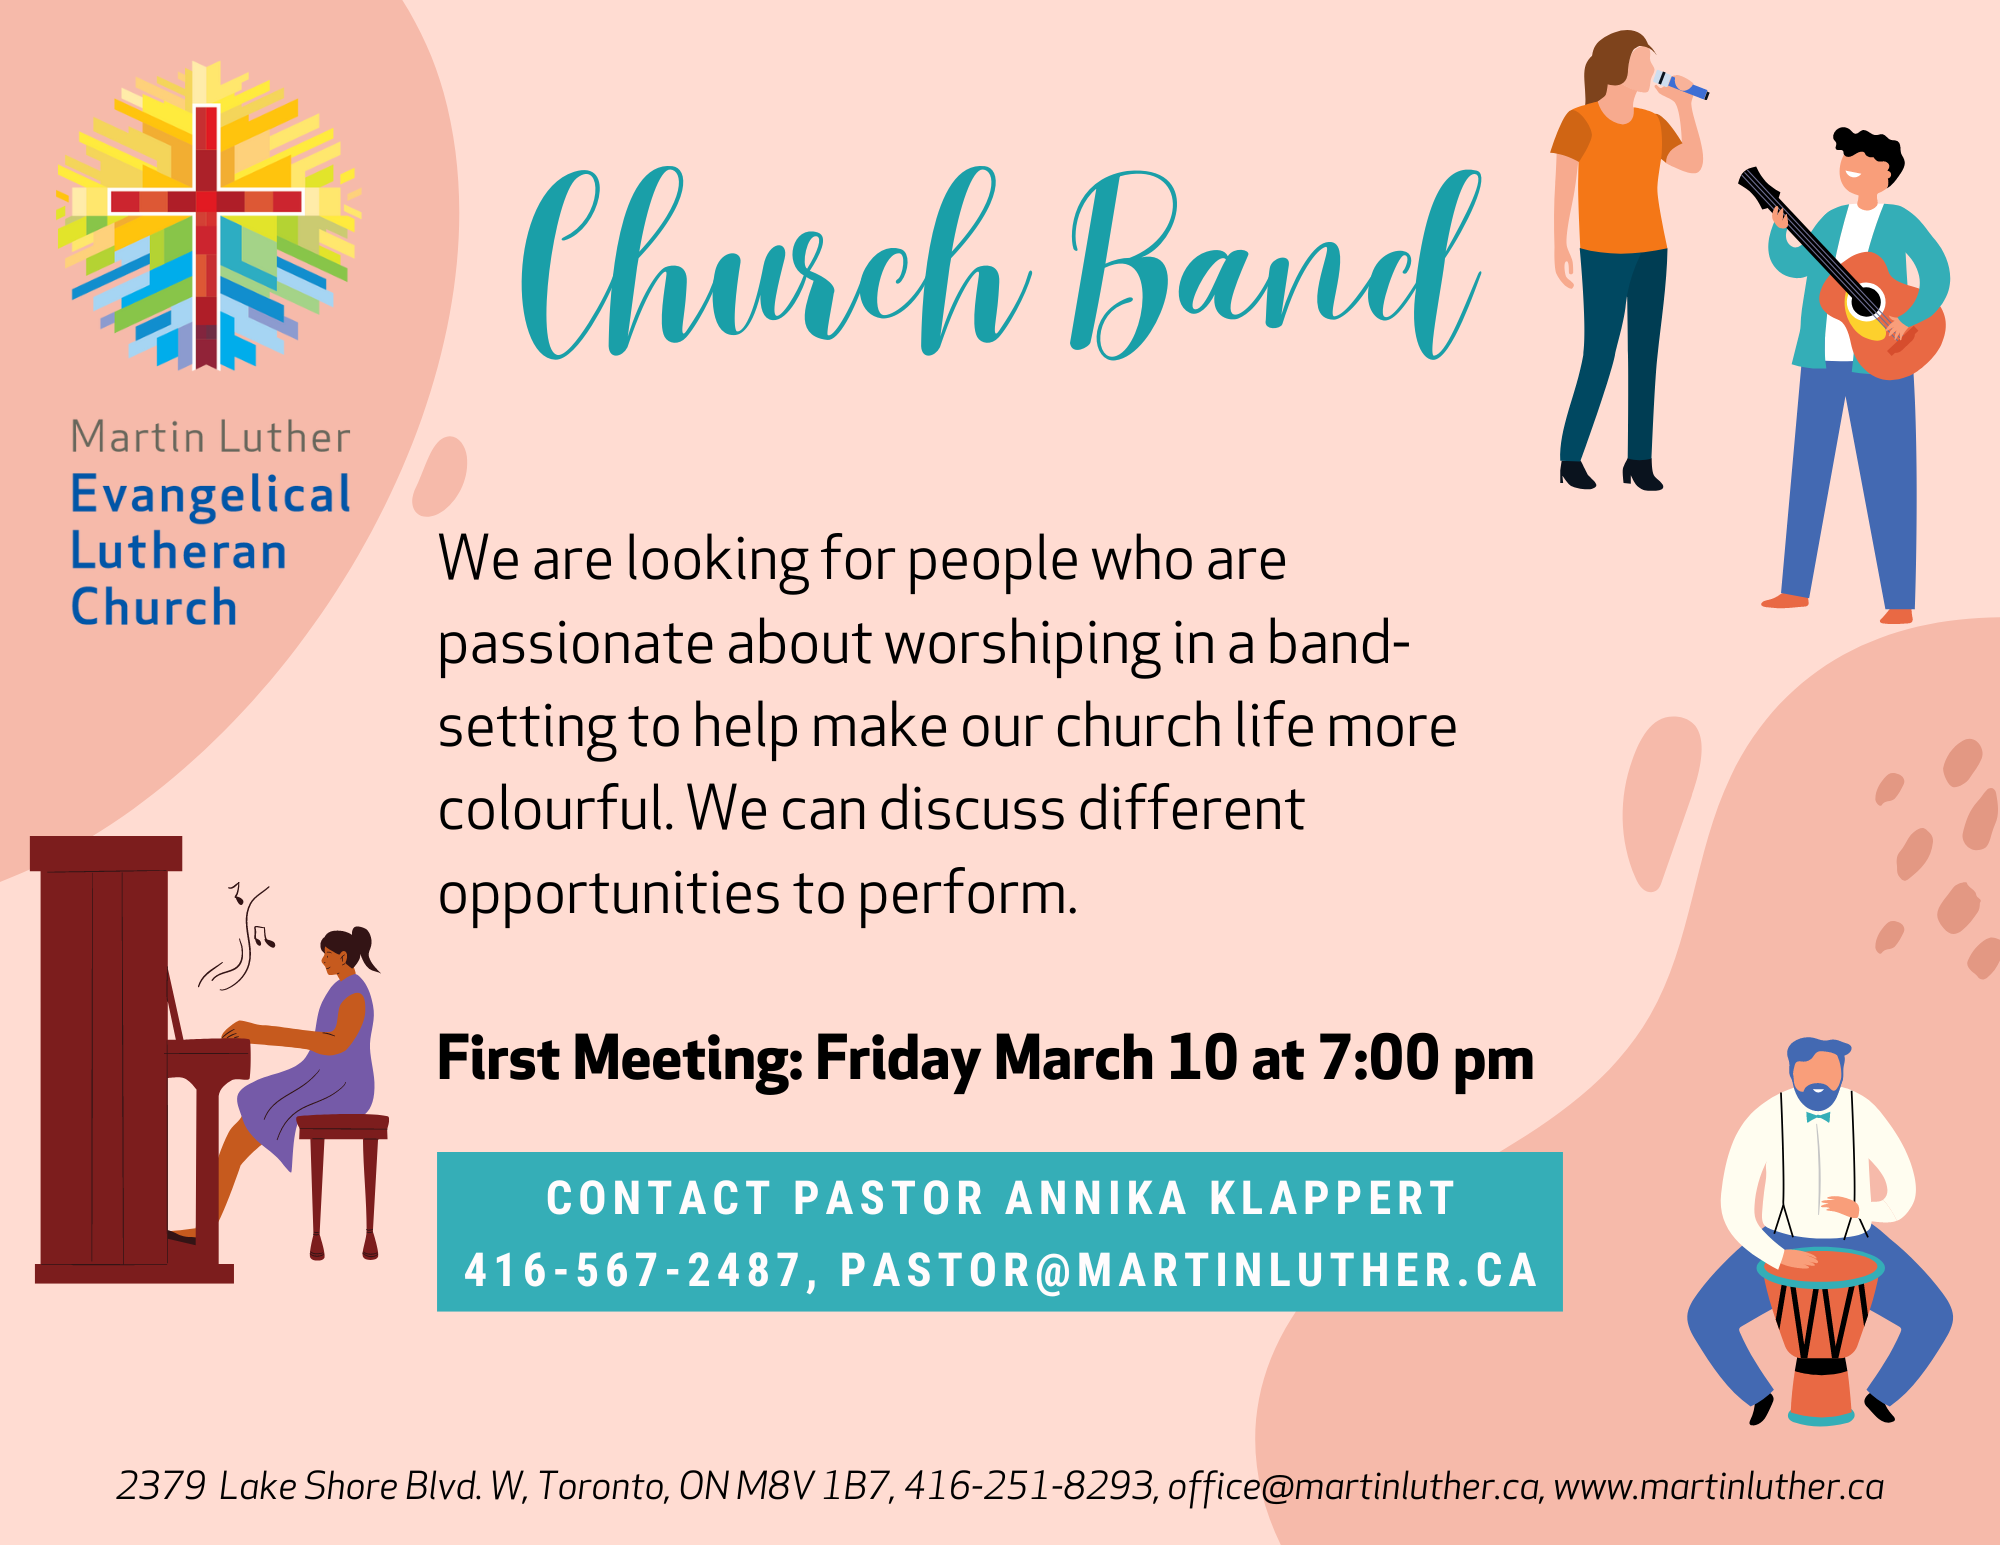 7:00 Pm Church Band – FIRST MEETING